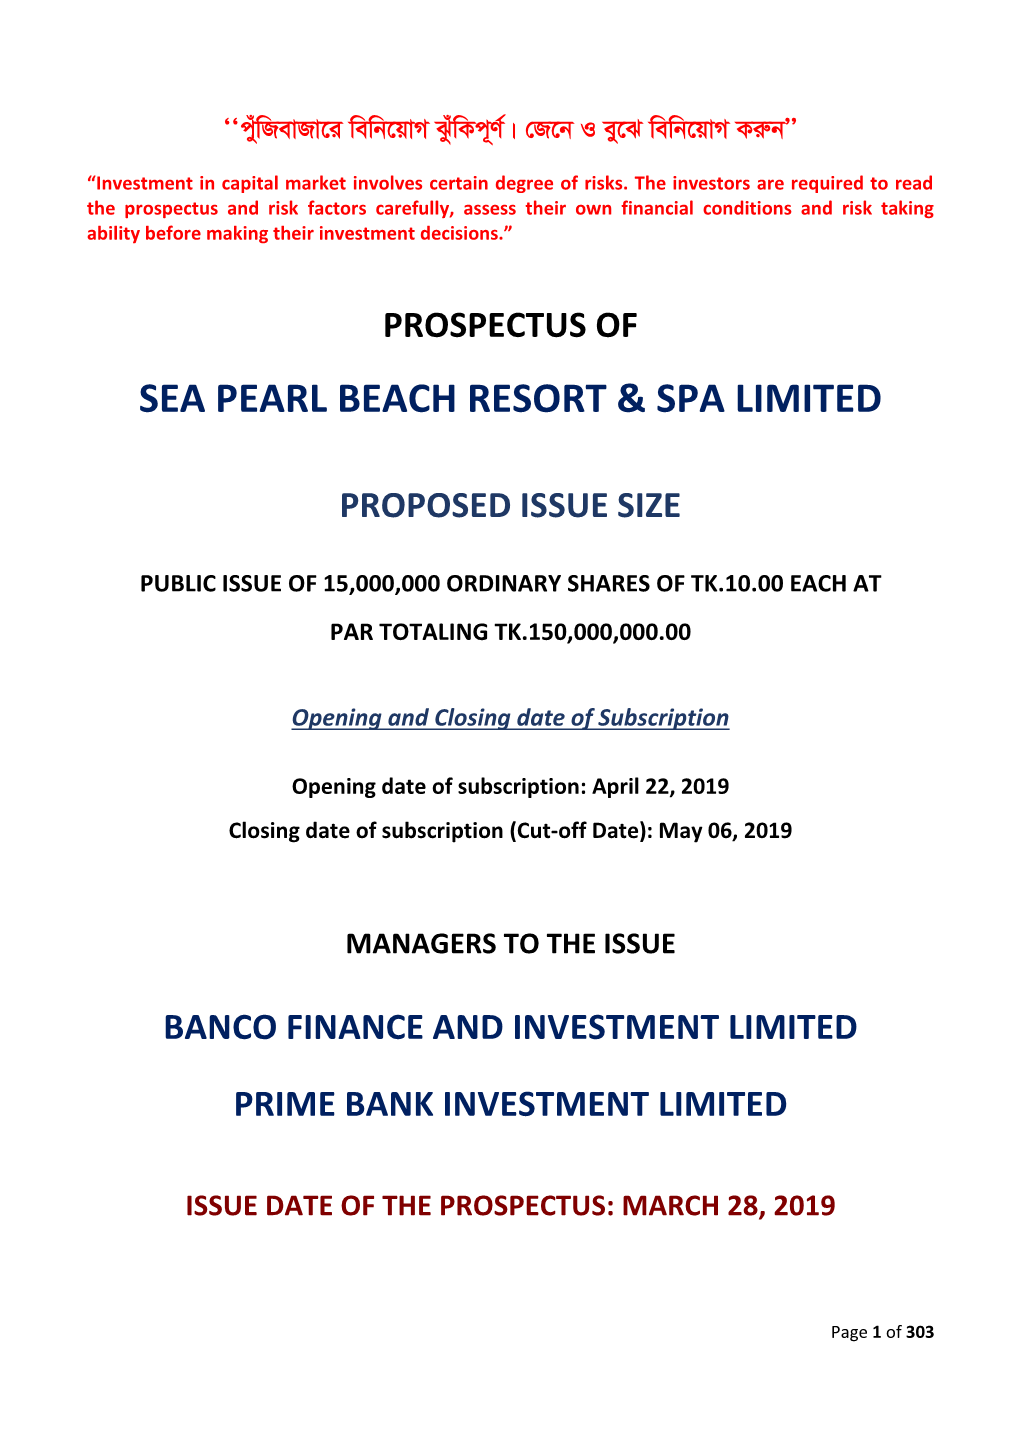 Sea Pearl Beach Resort & Spa Limited